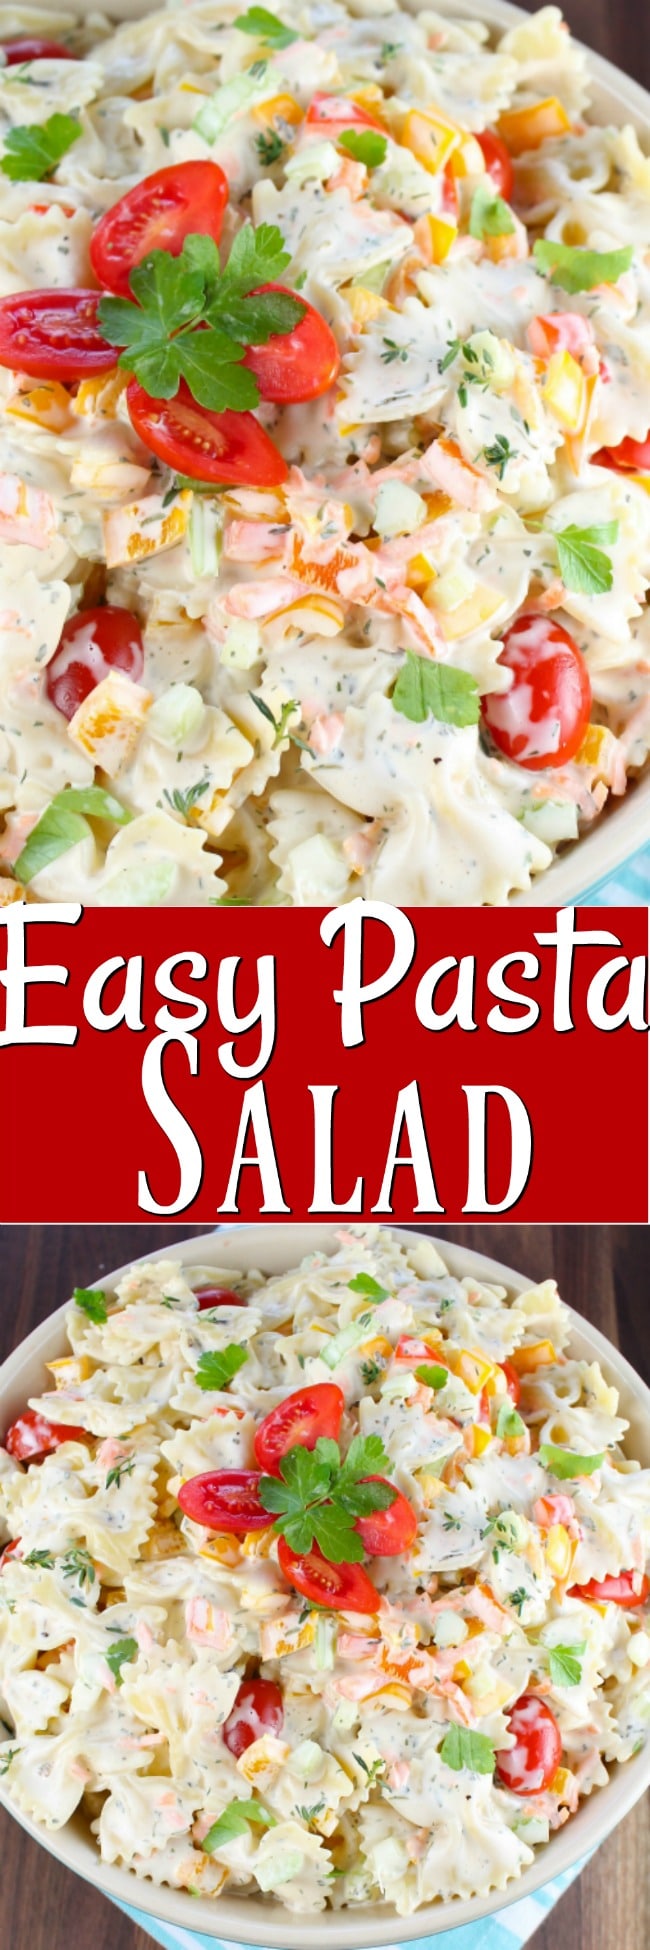 Easy Pasta Salad Photo Collage